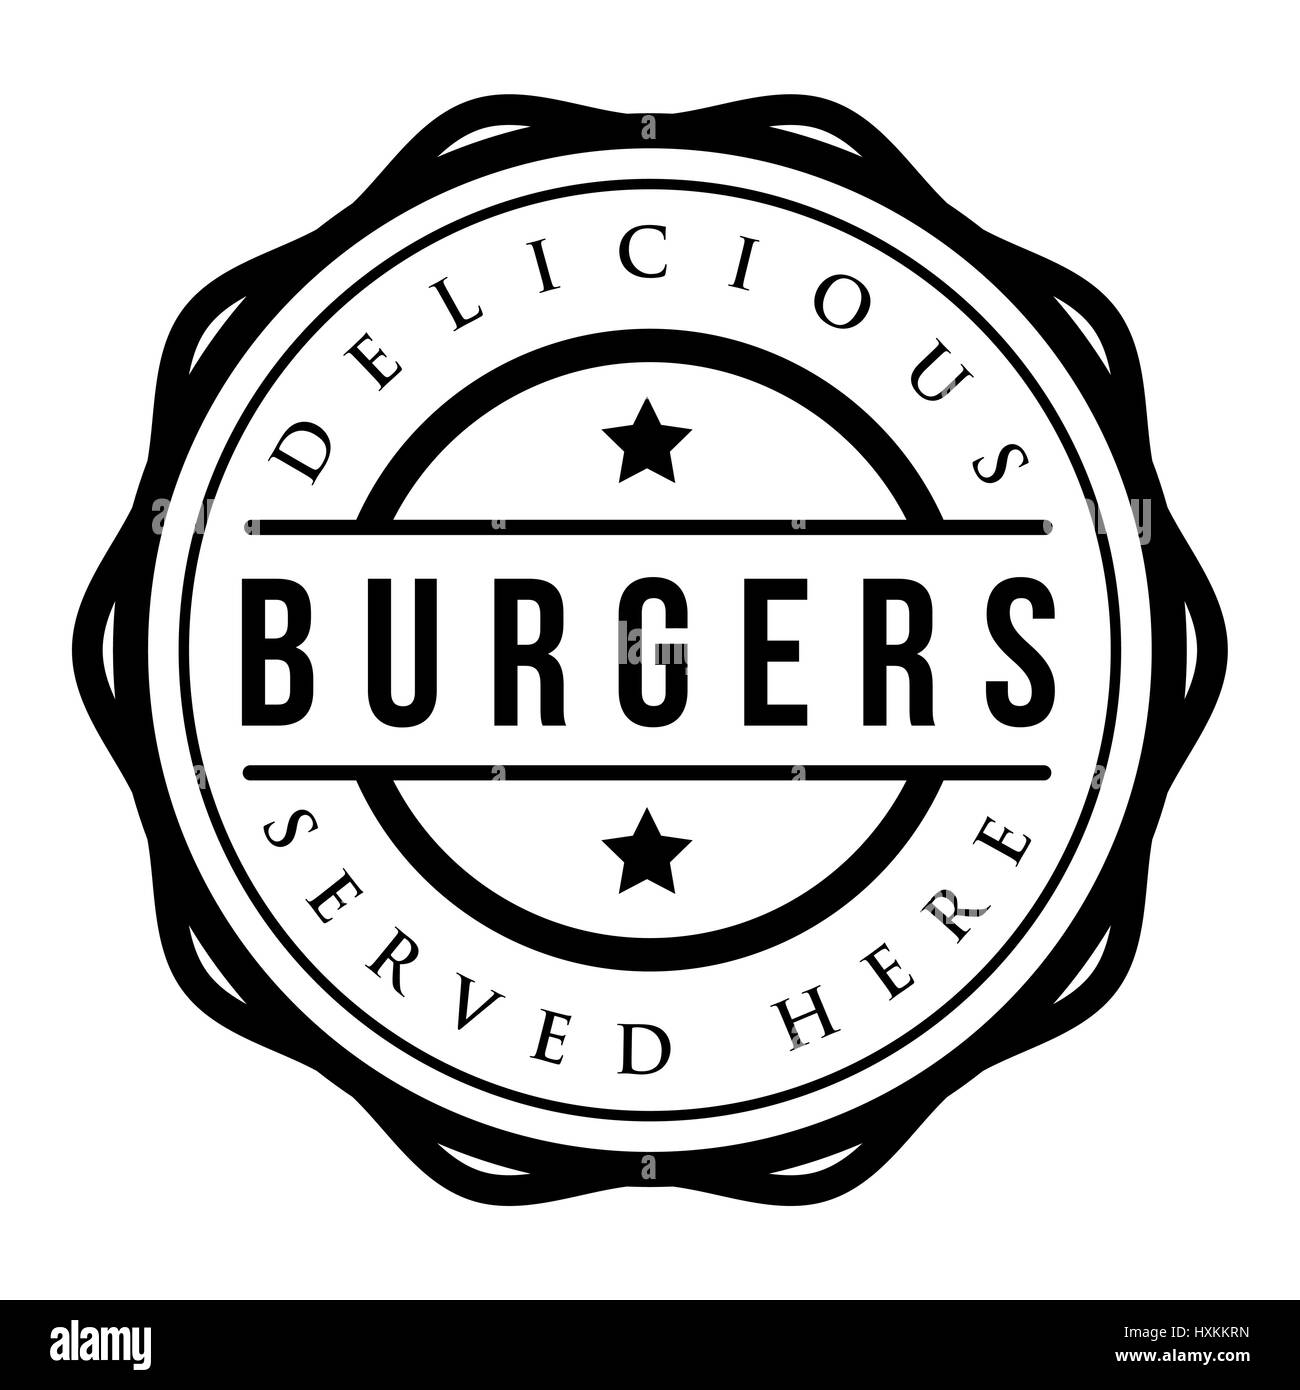 Burgers vintage stamp vector Stock Vector